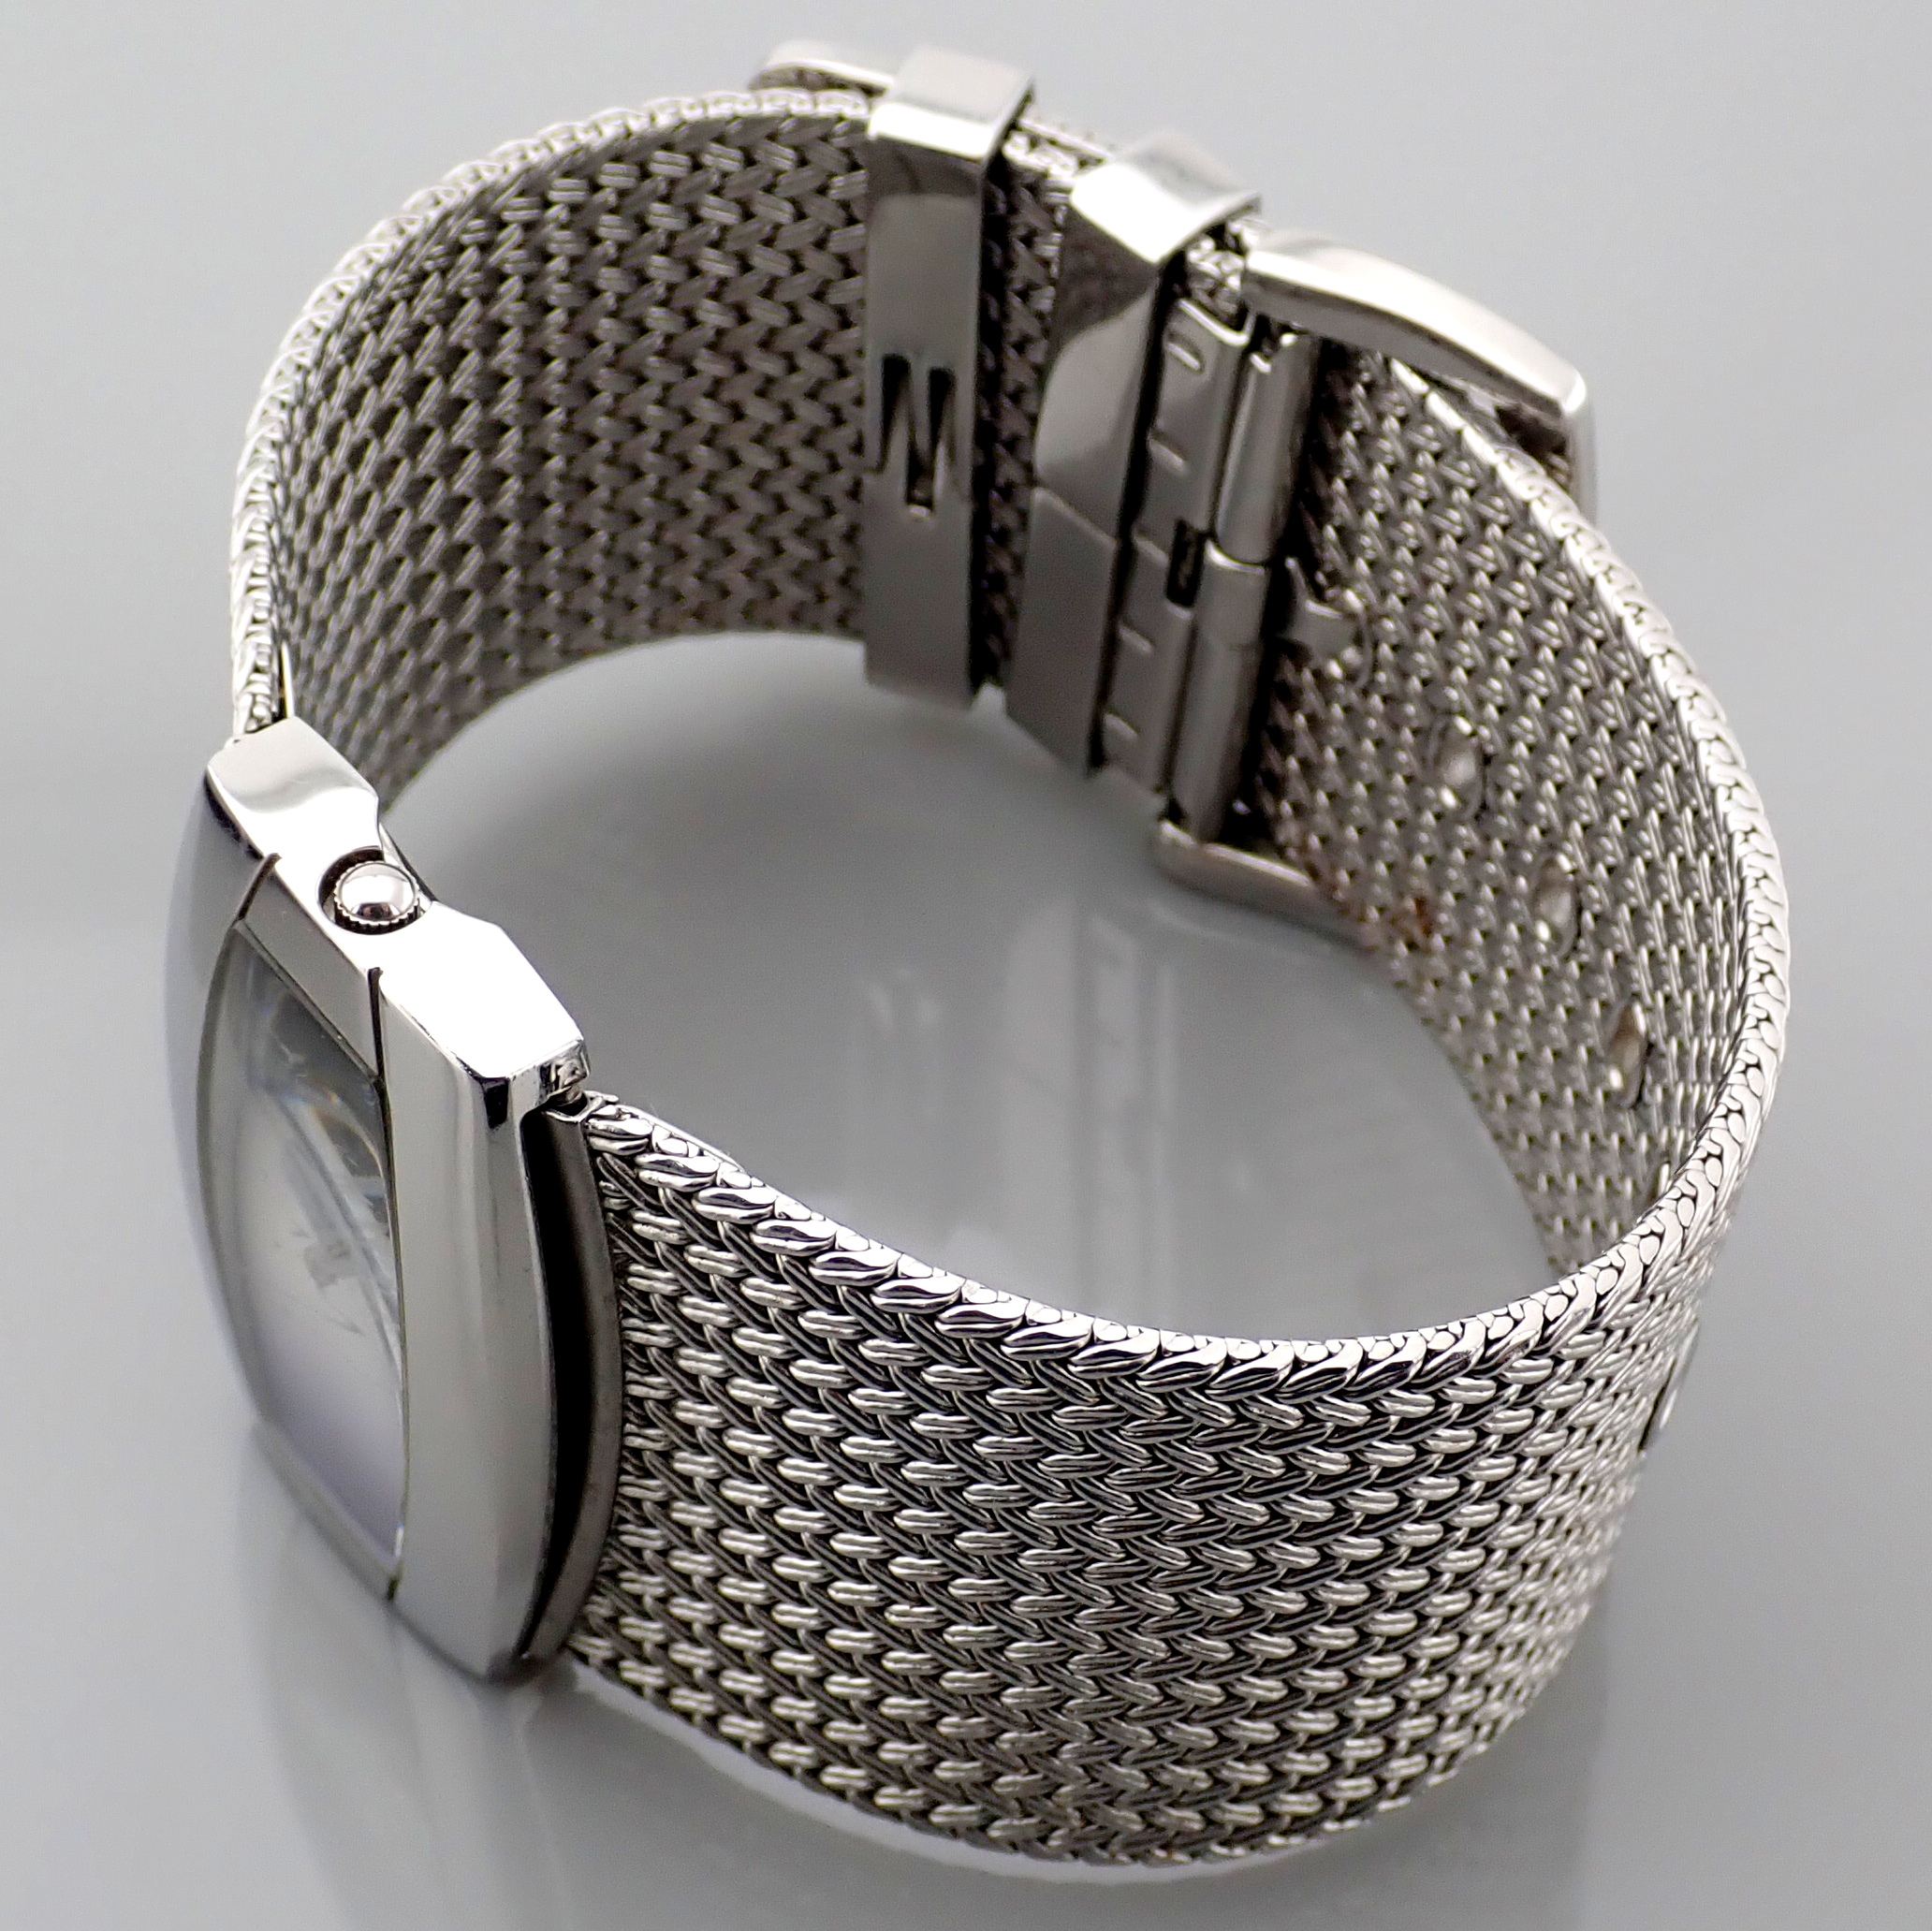 Roberto Cavalli - Lady's Steel Wrist Watch - Image 6 of 7